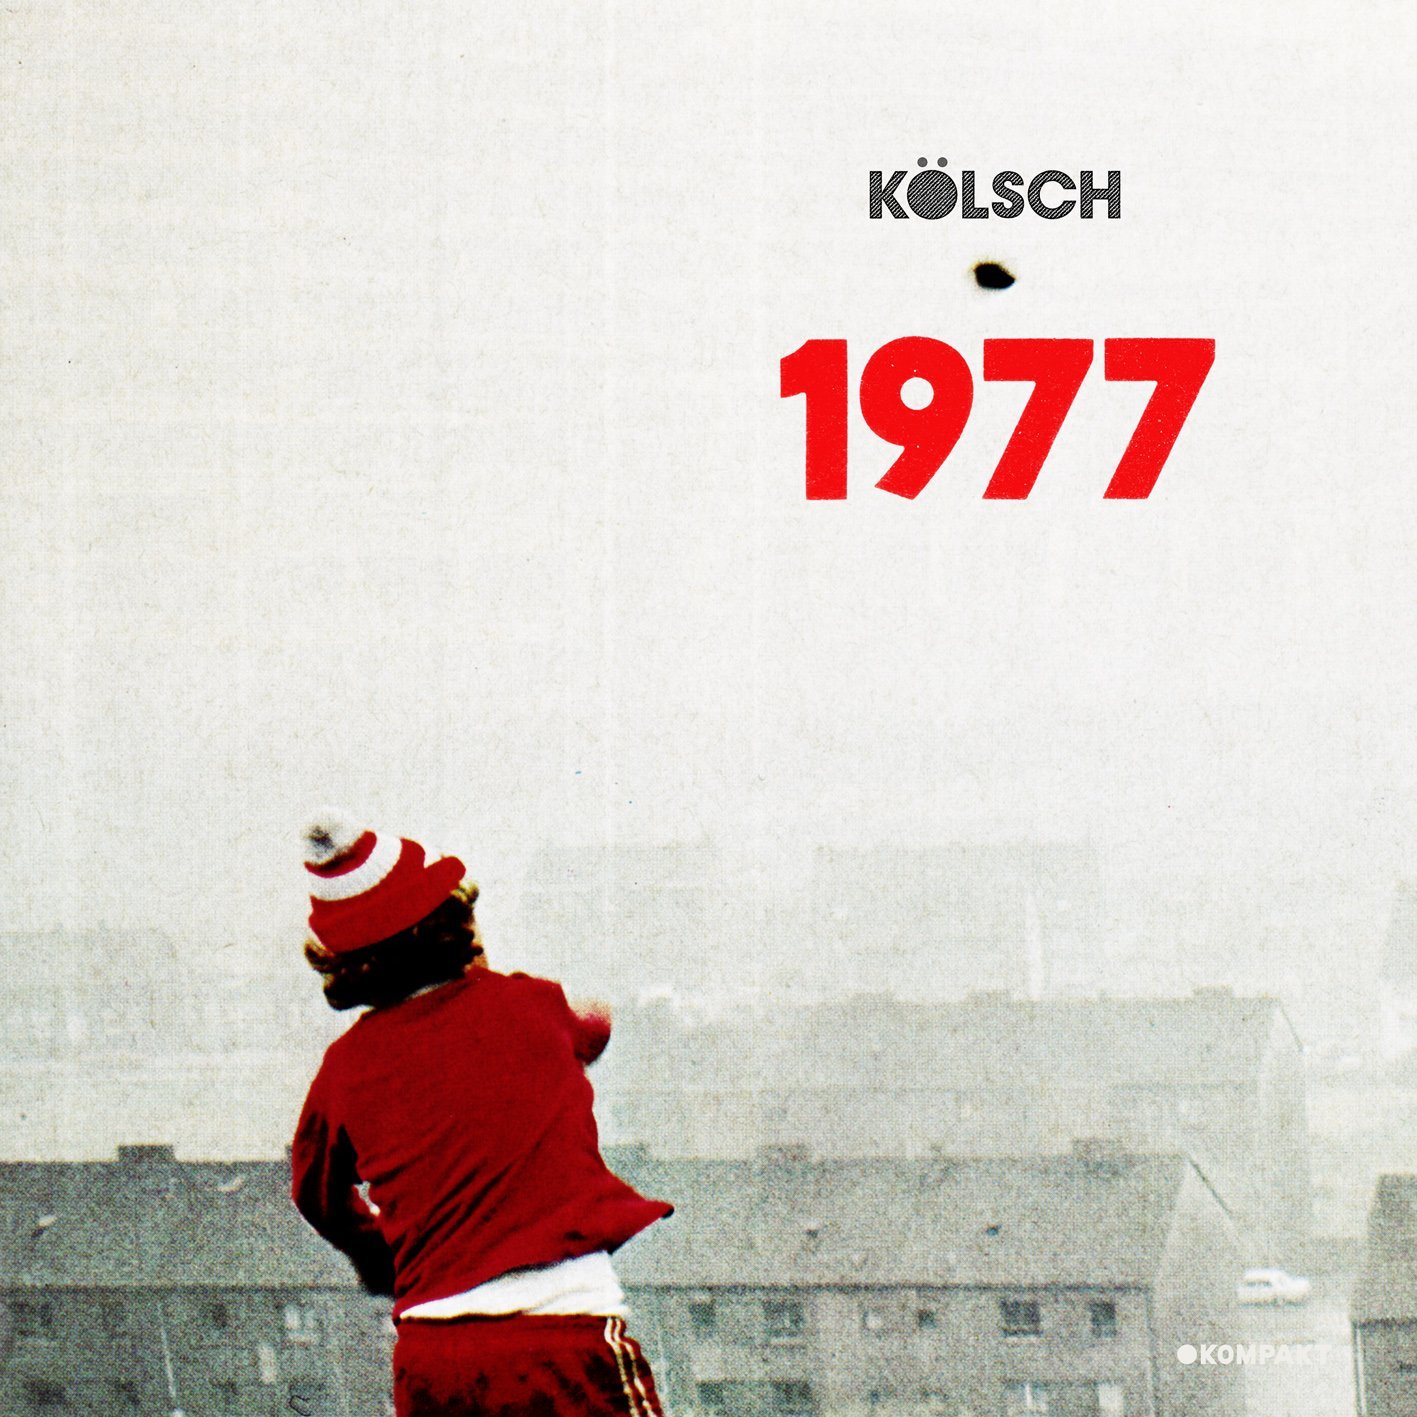 Kolsch - 1977